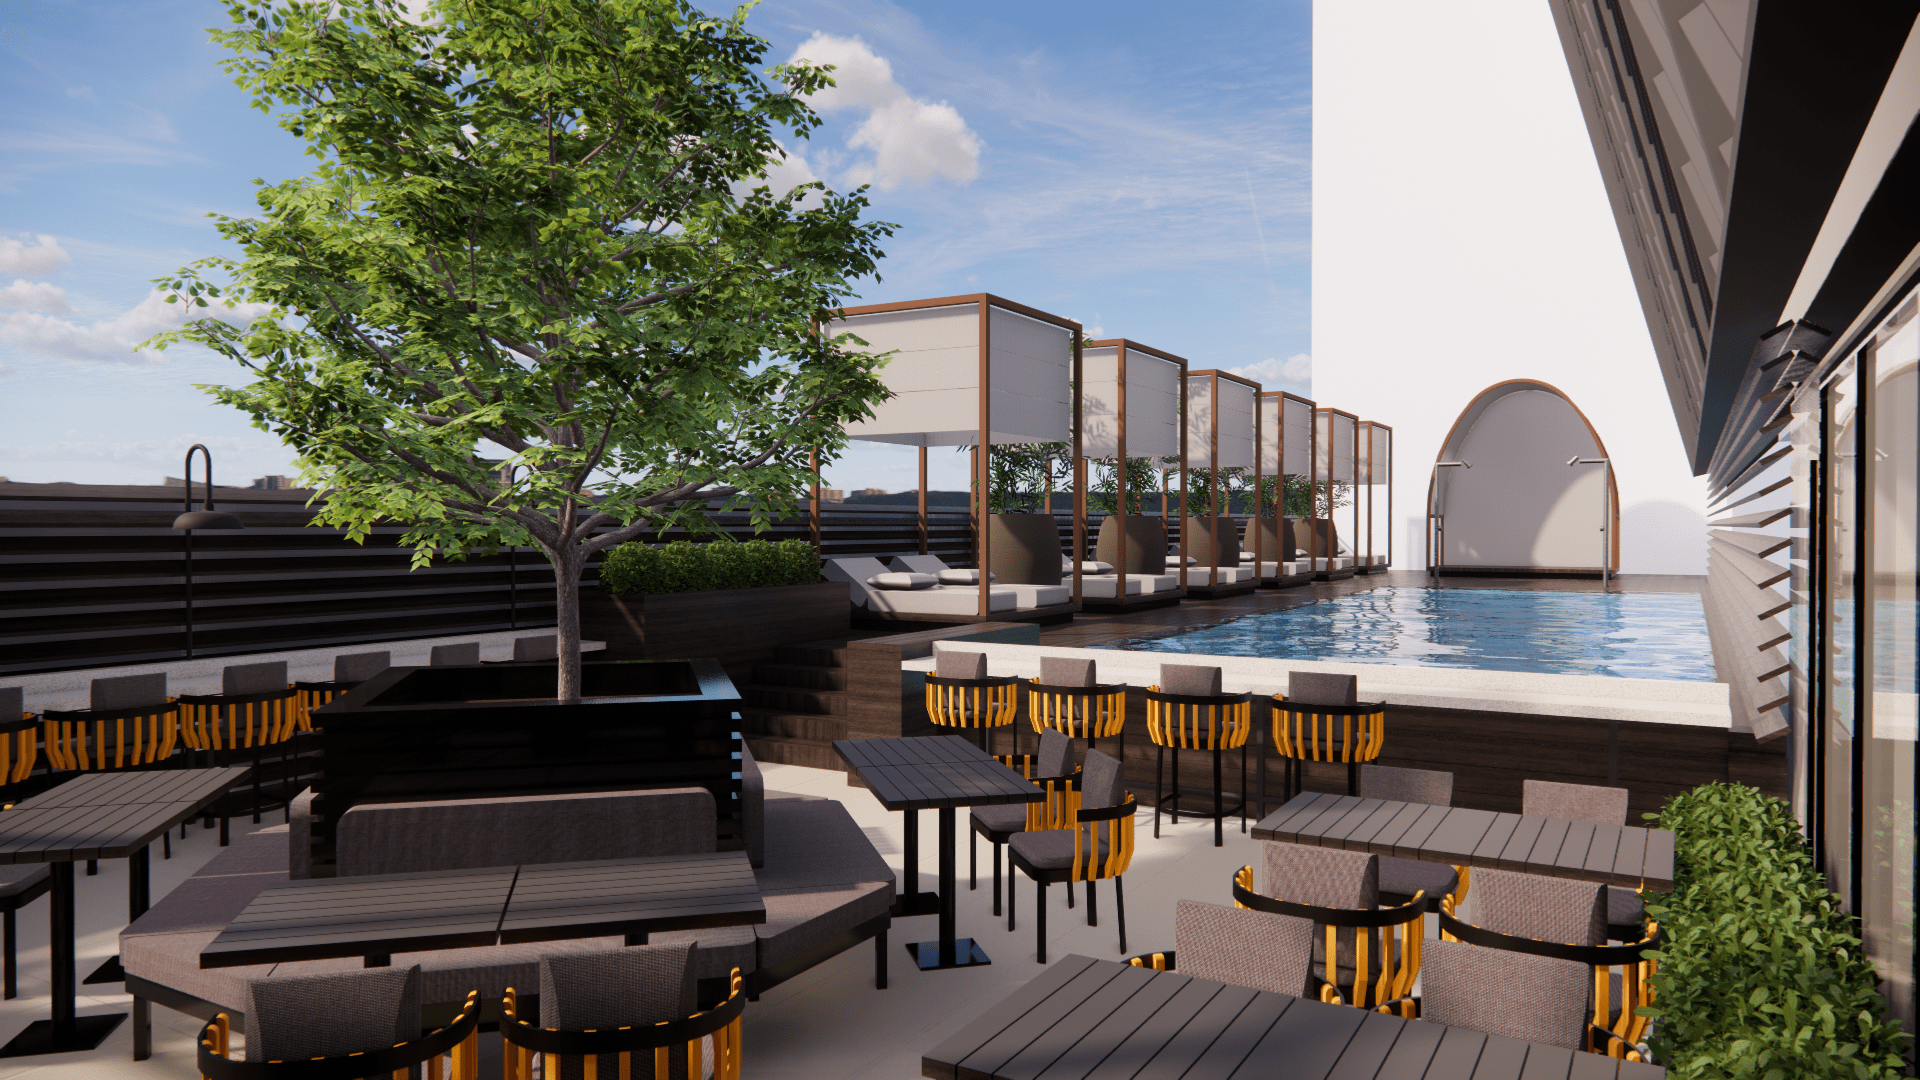 New hotels in singapore 2022 - beach club